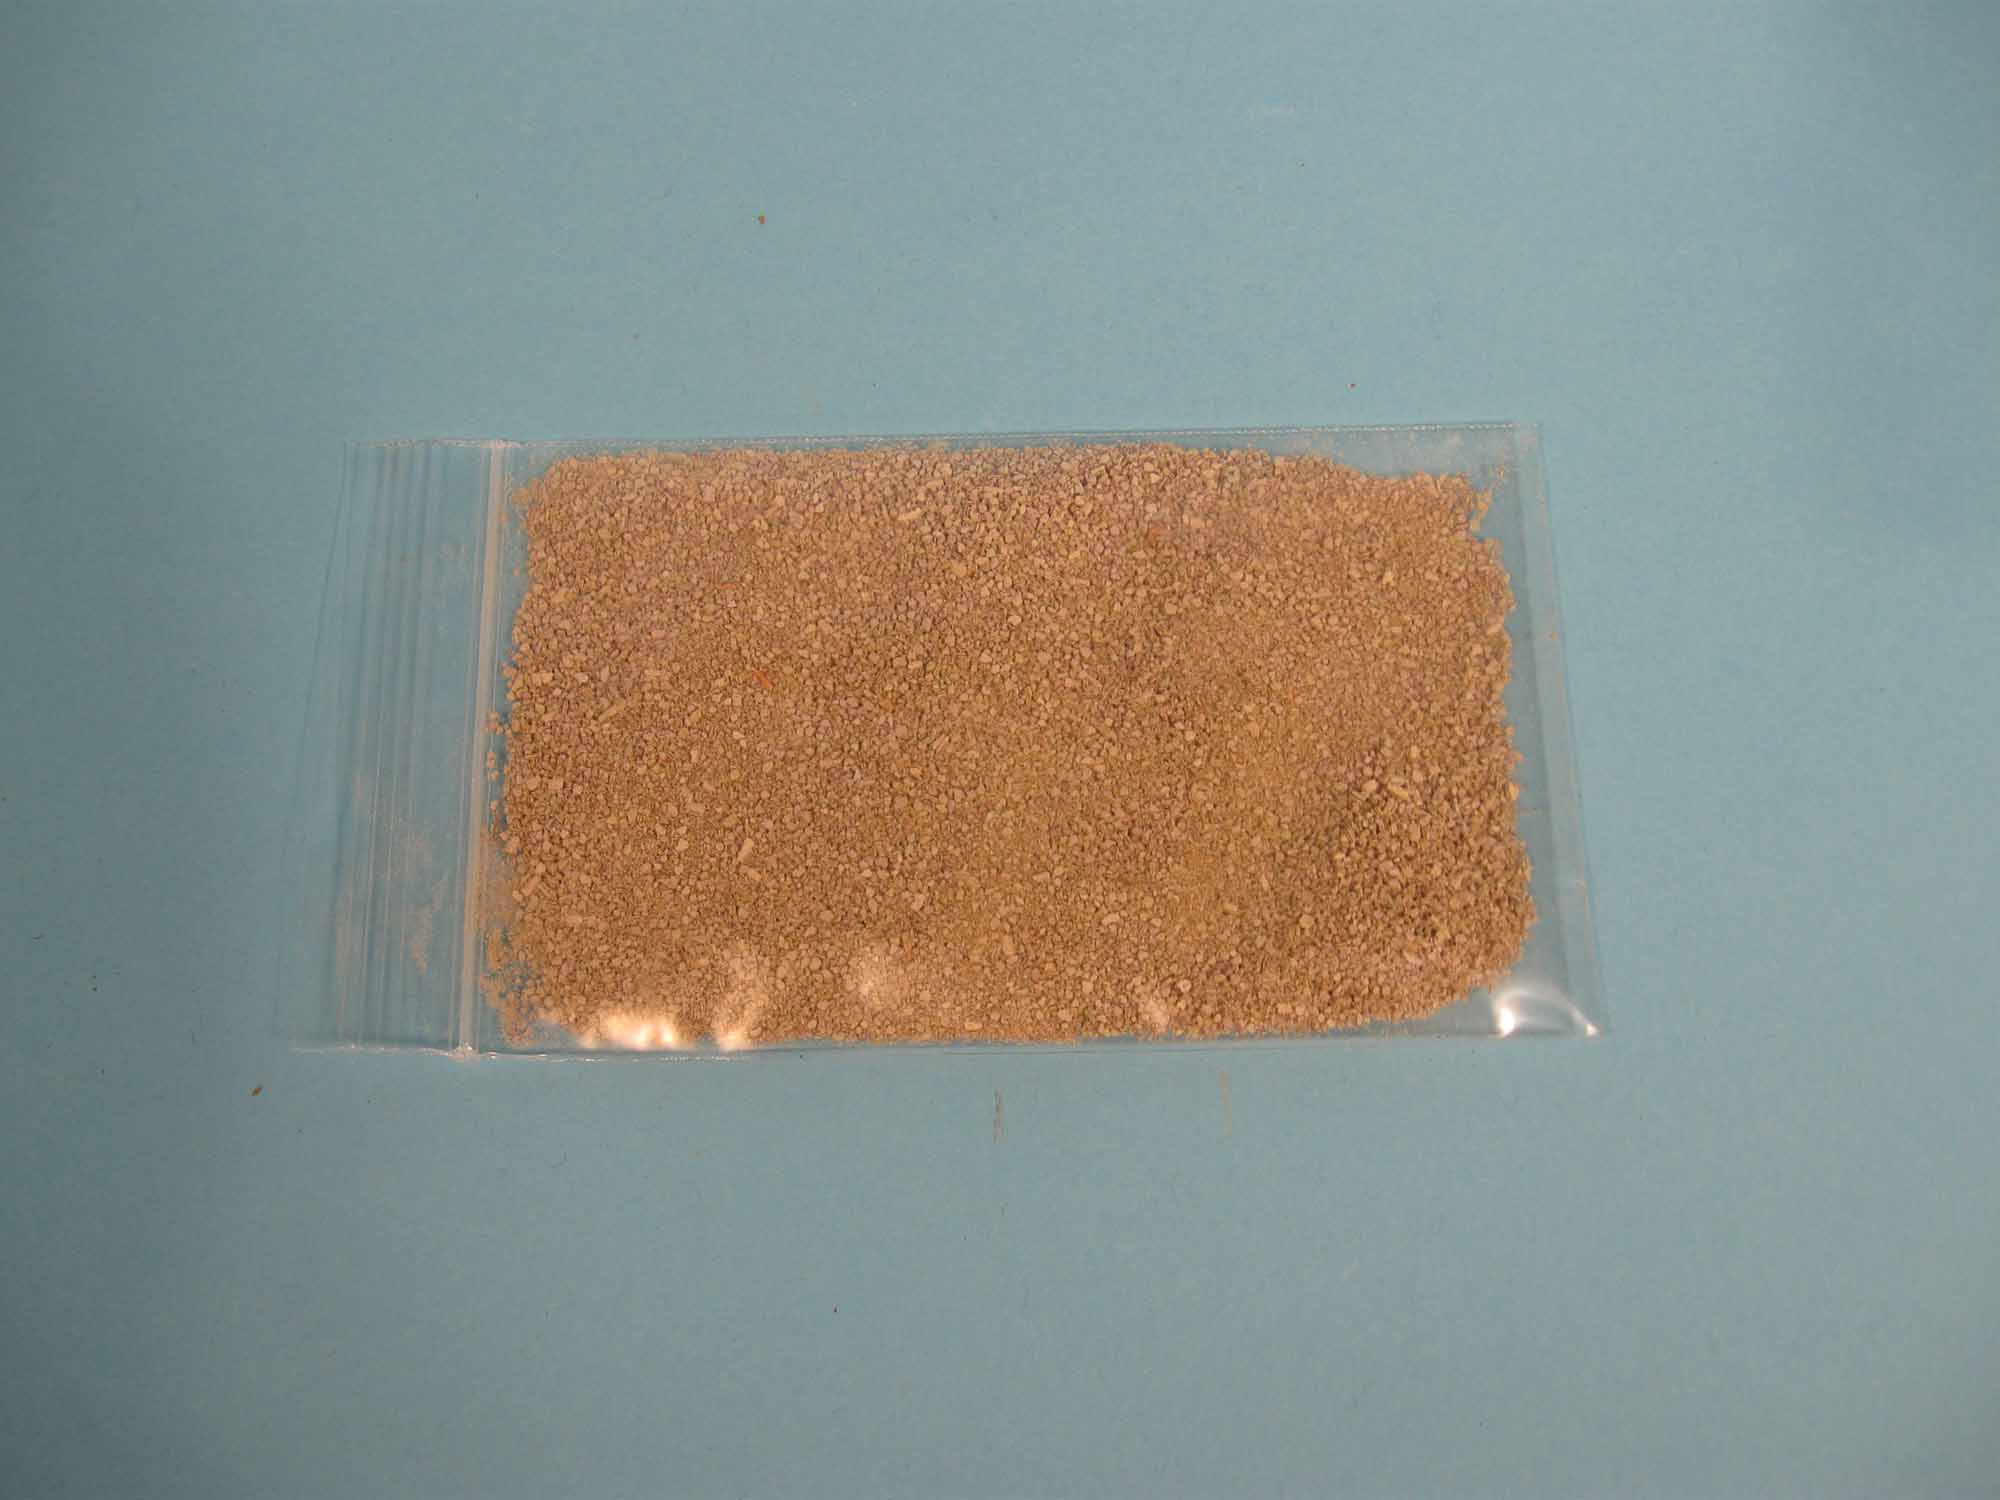 Ground White Sage (1 oz bag) - 1104-20-1 (F11)